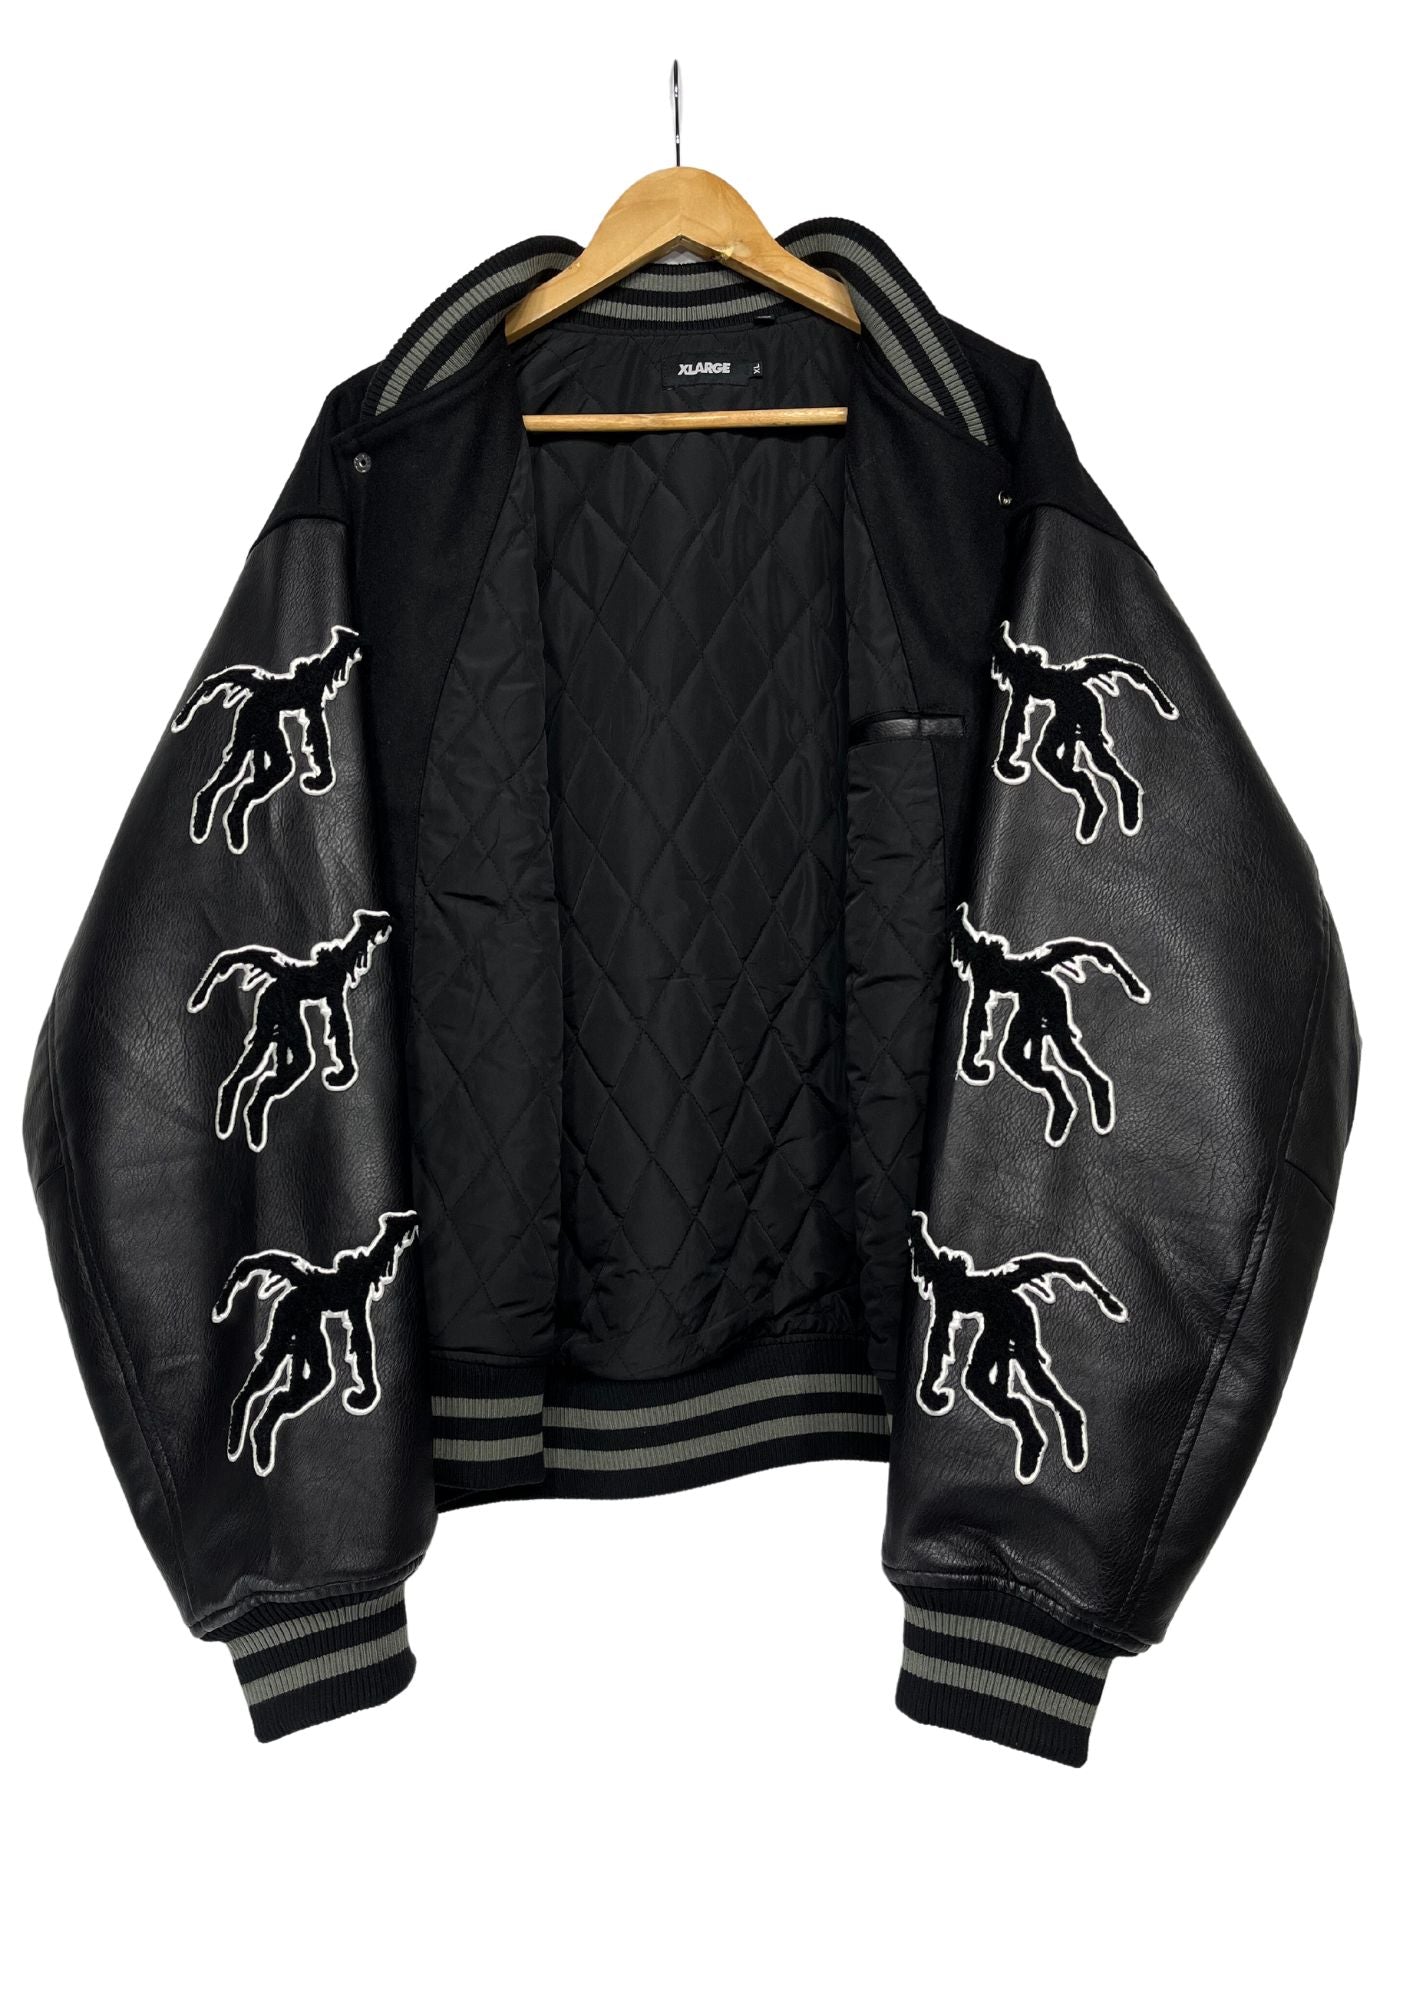 Death Note x X-Large Varsity Jacket